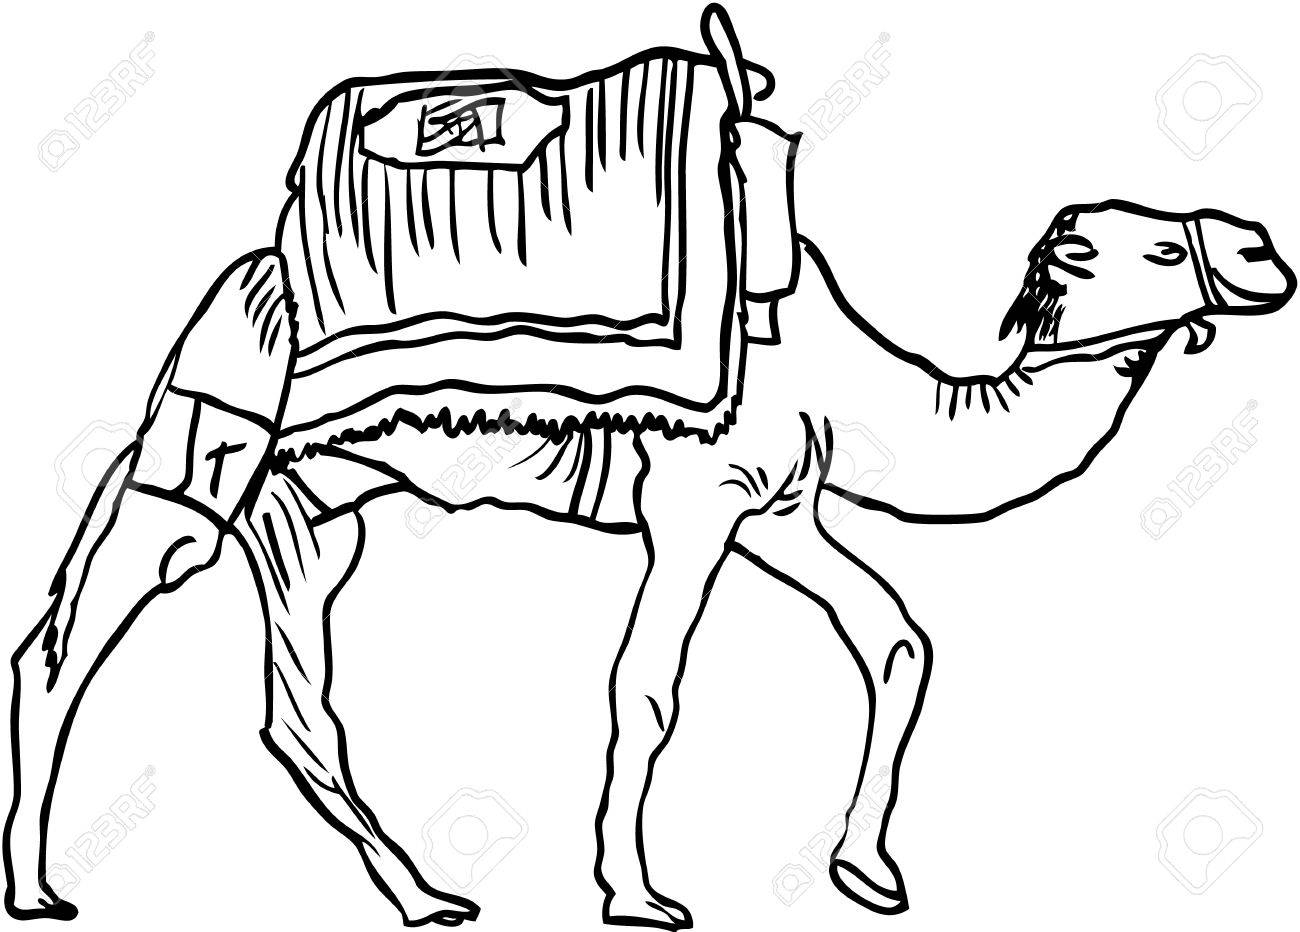 Верблюд с грузом